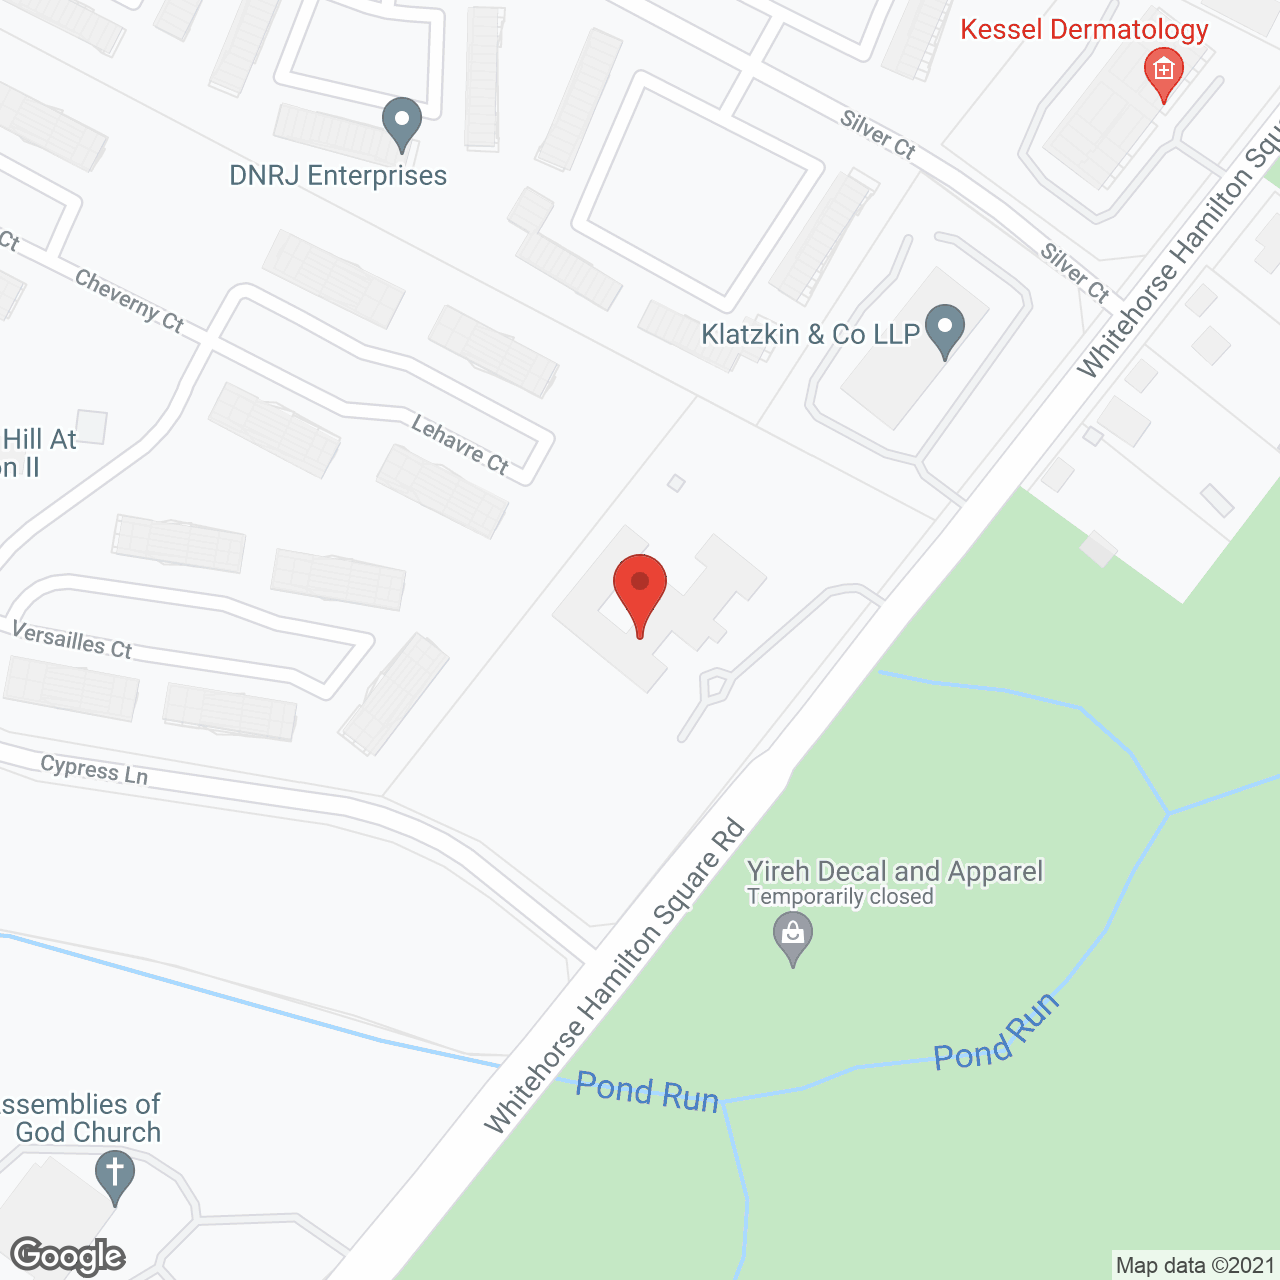 CareOne at Hamilton in google map